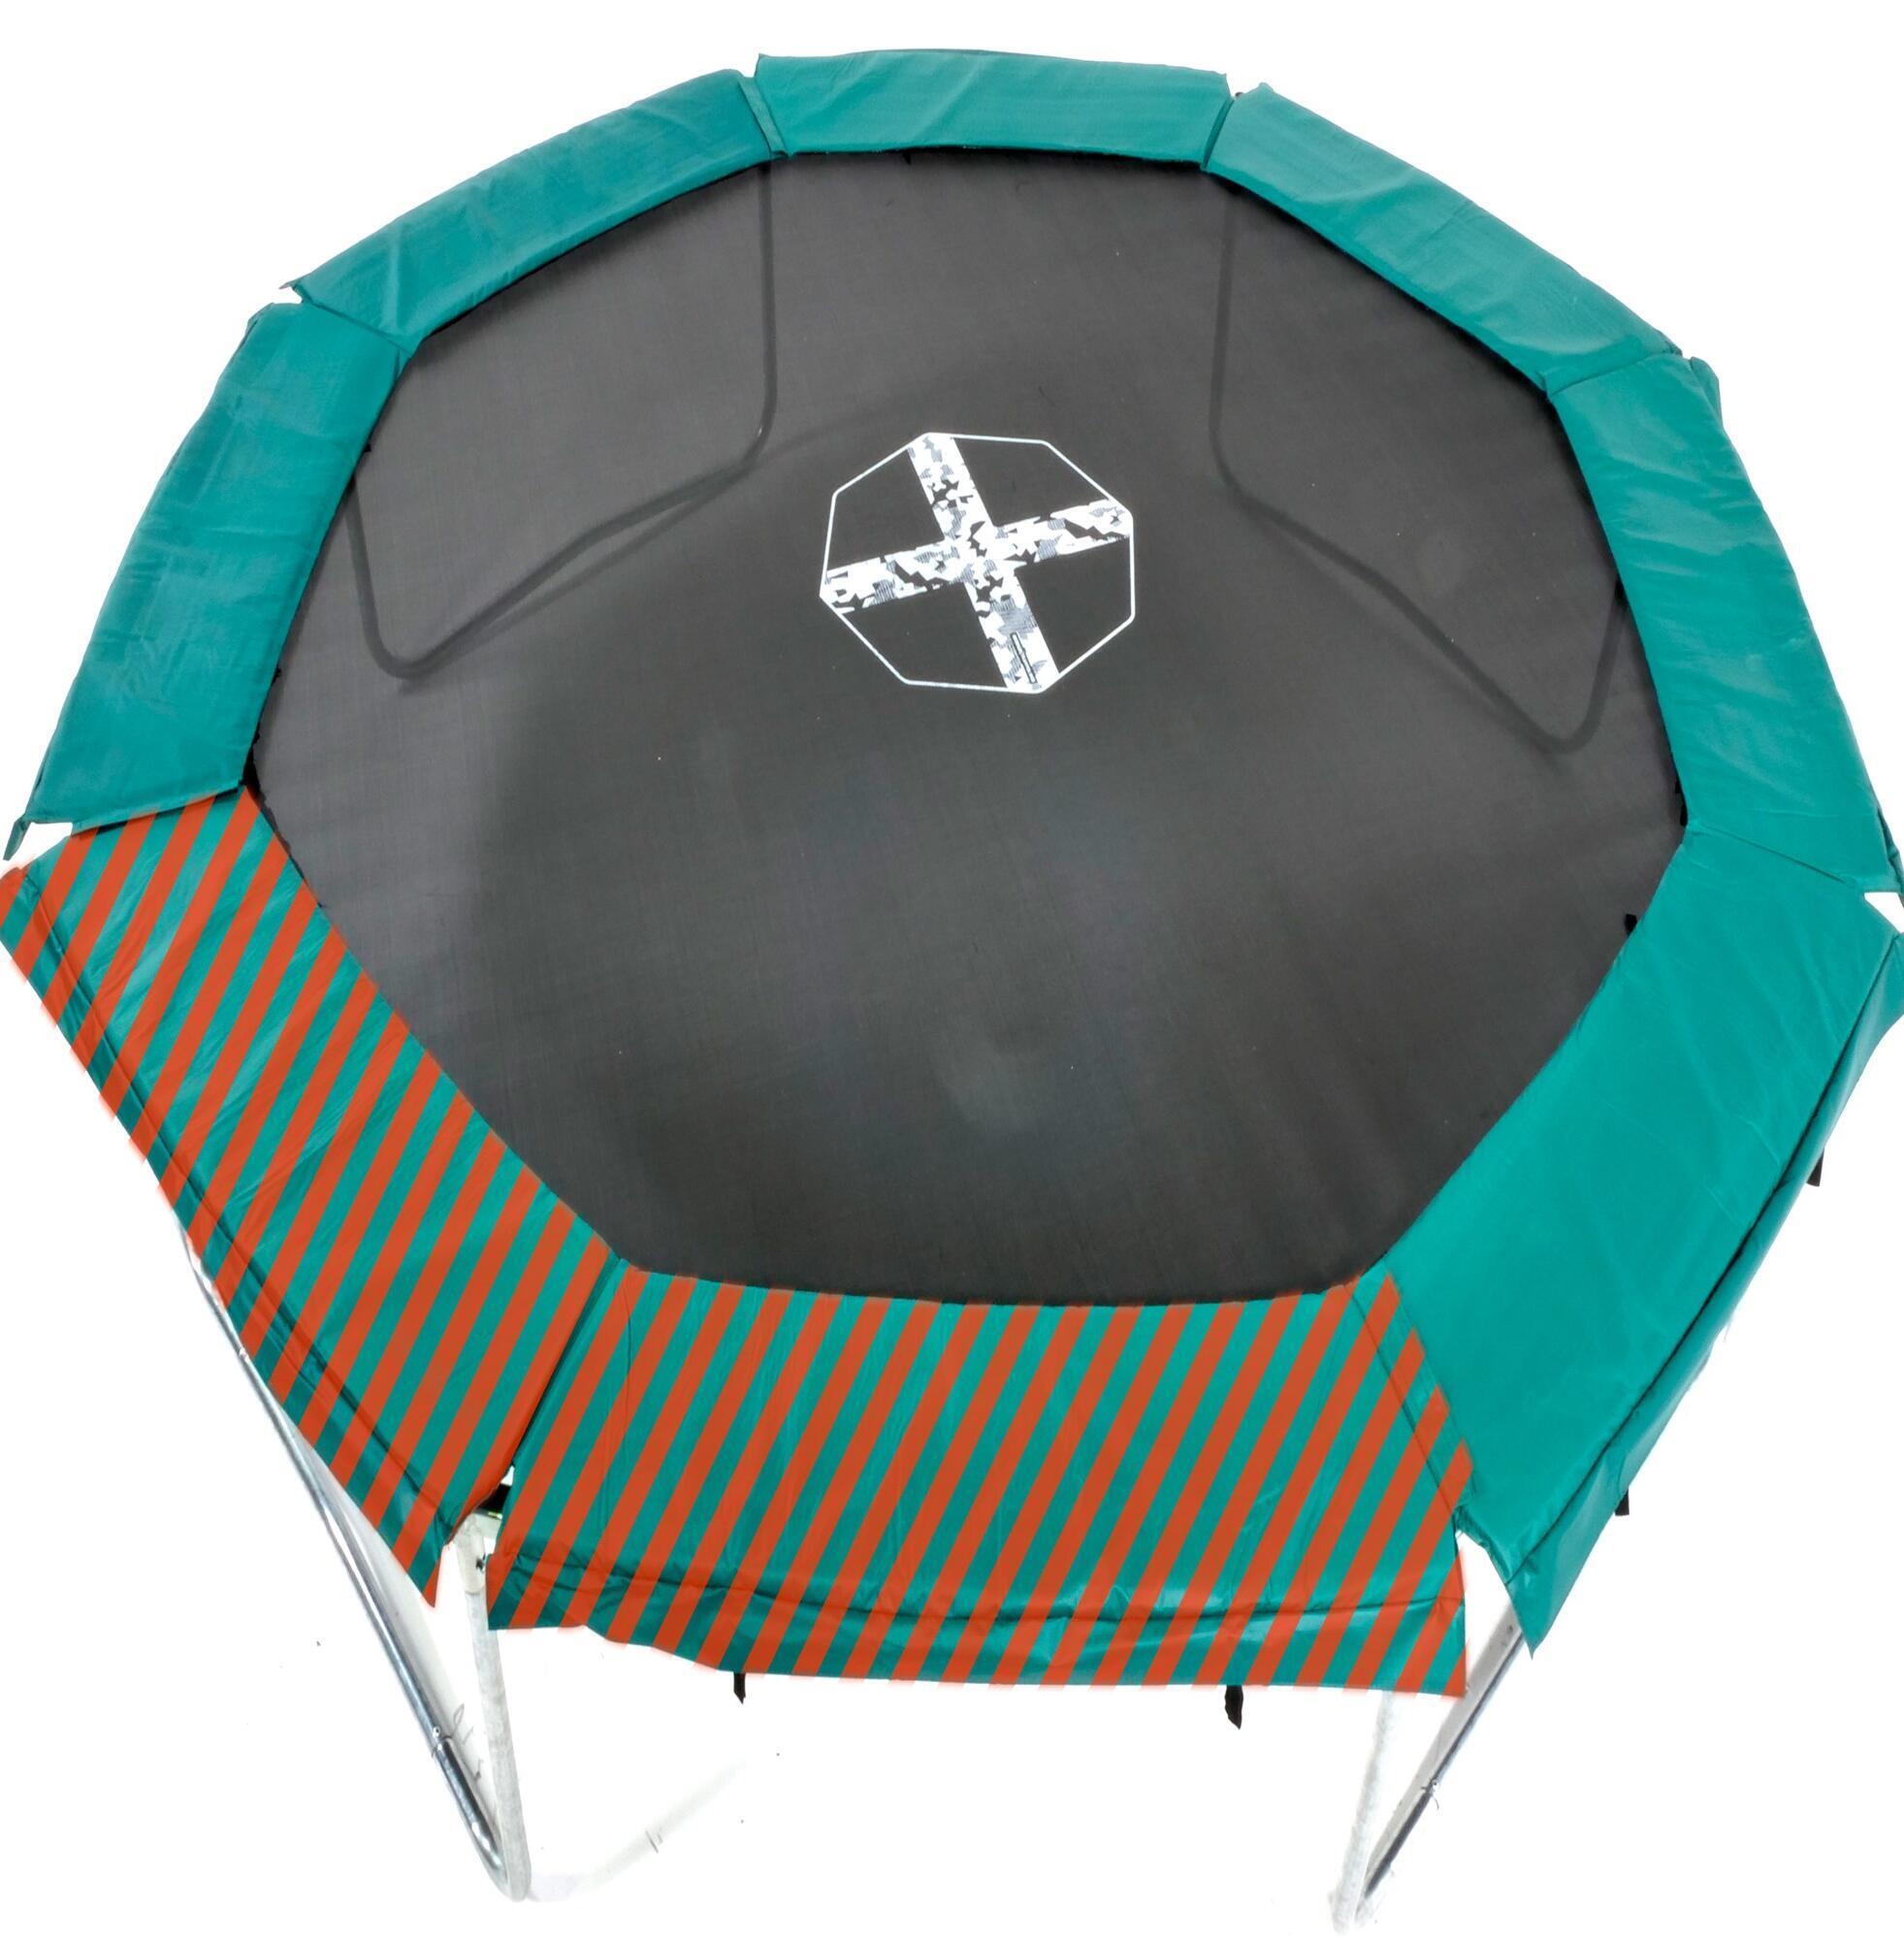 Octagonal 300 trampoline padding